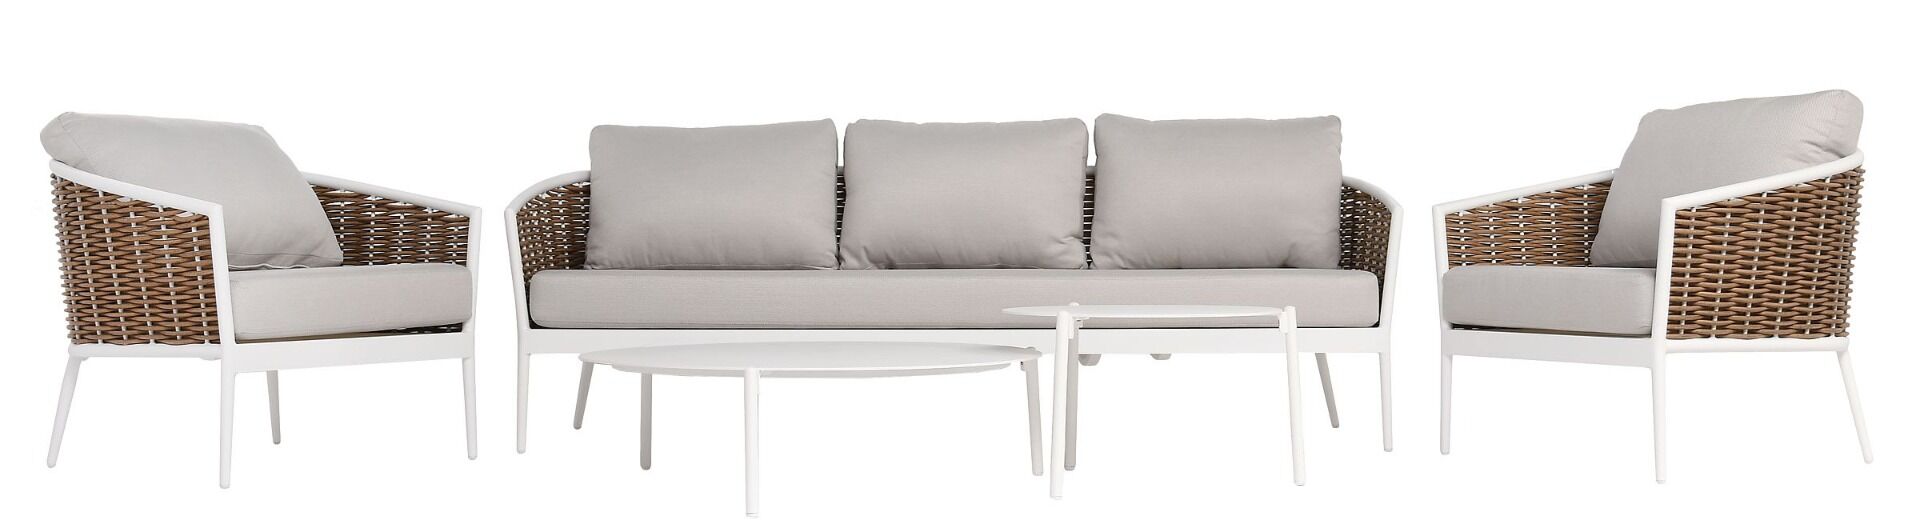 Sofa 3 osobowa Cora White 232x82x75cm